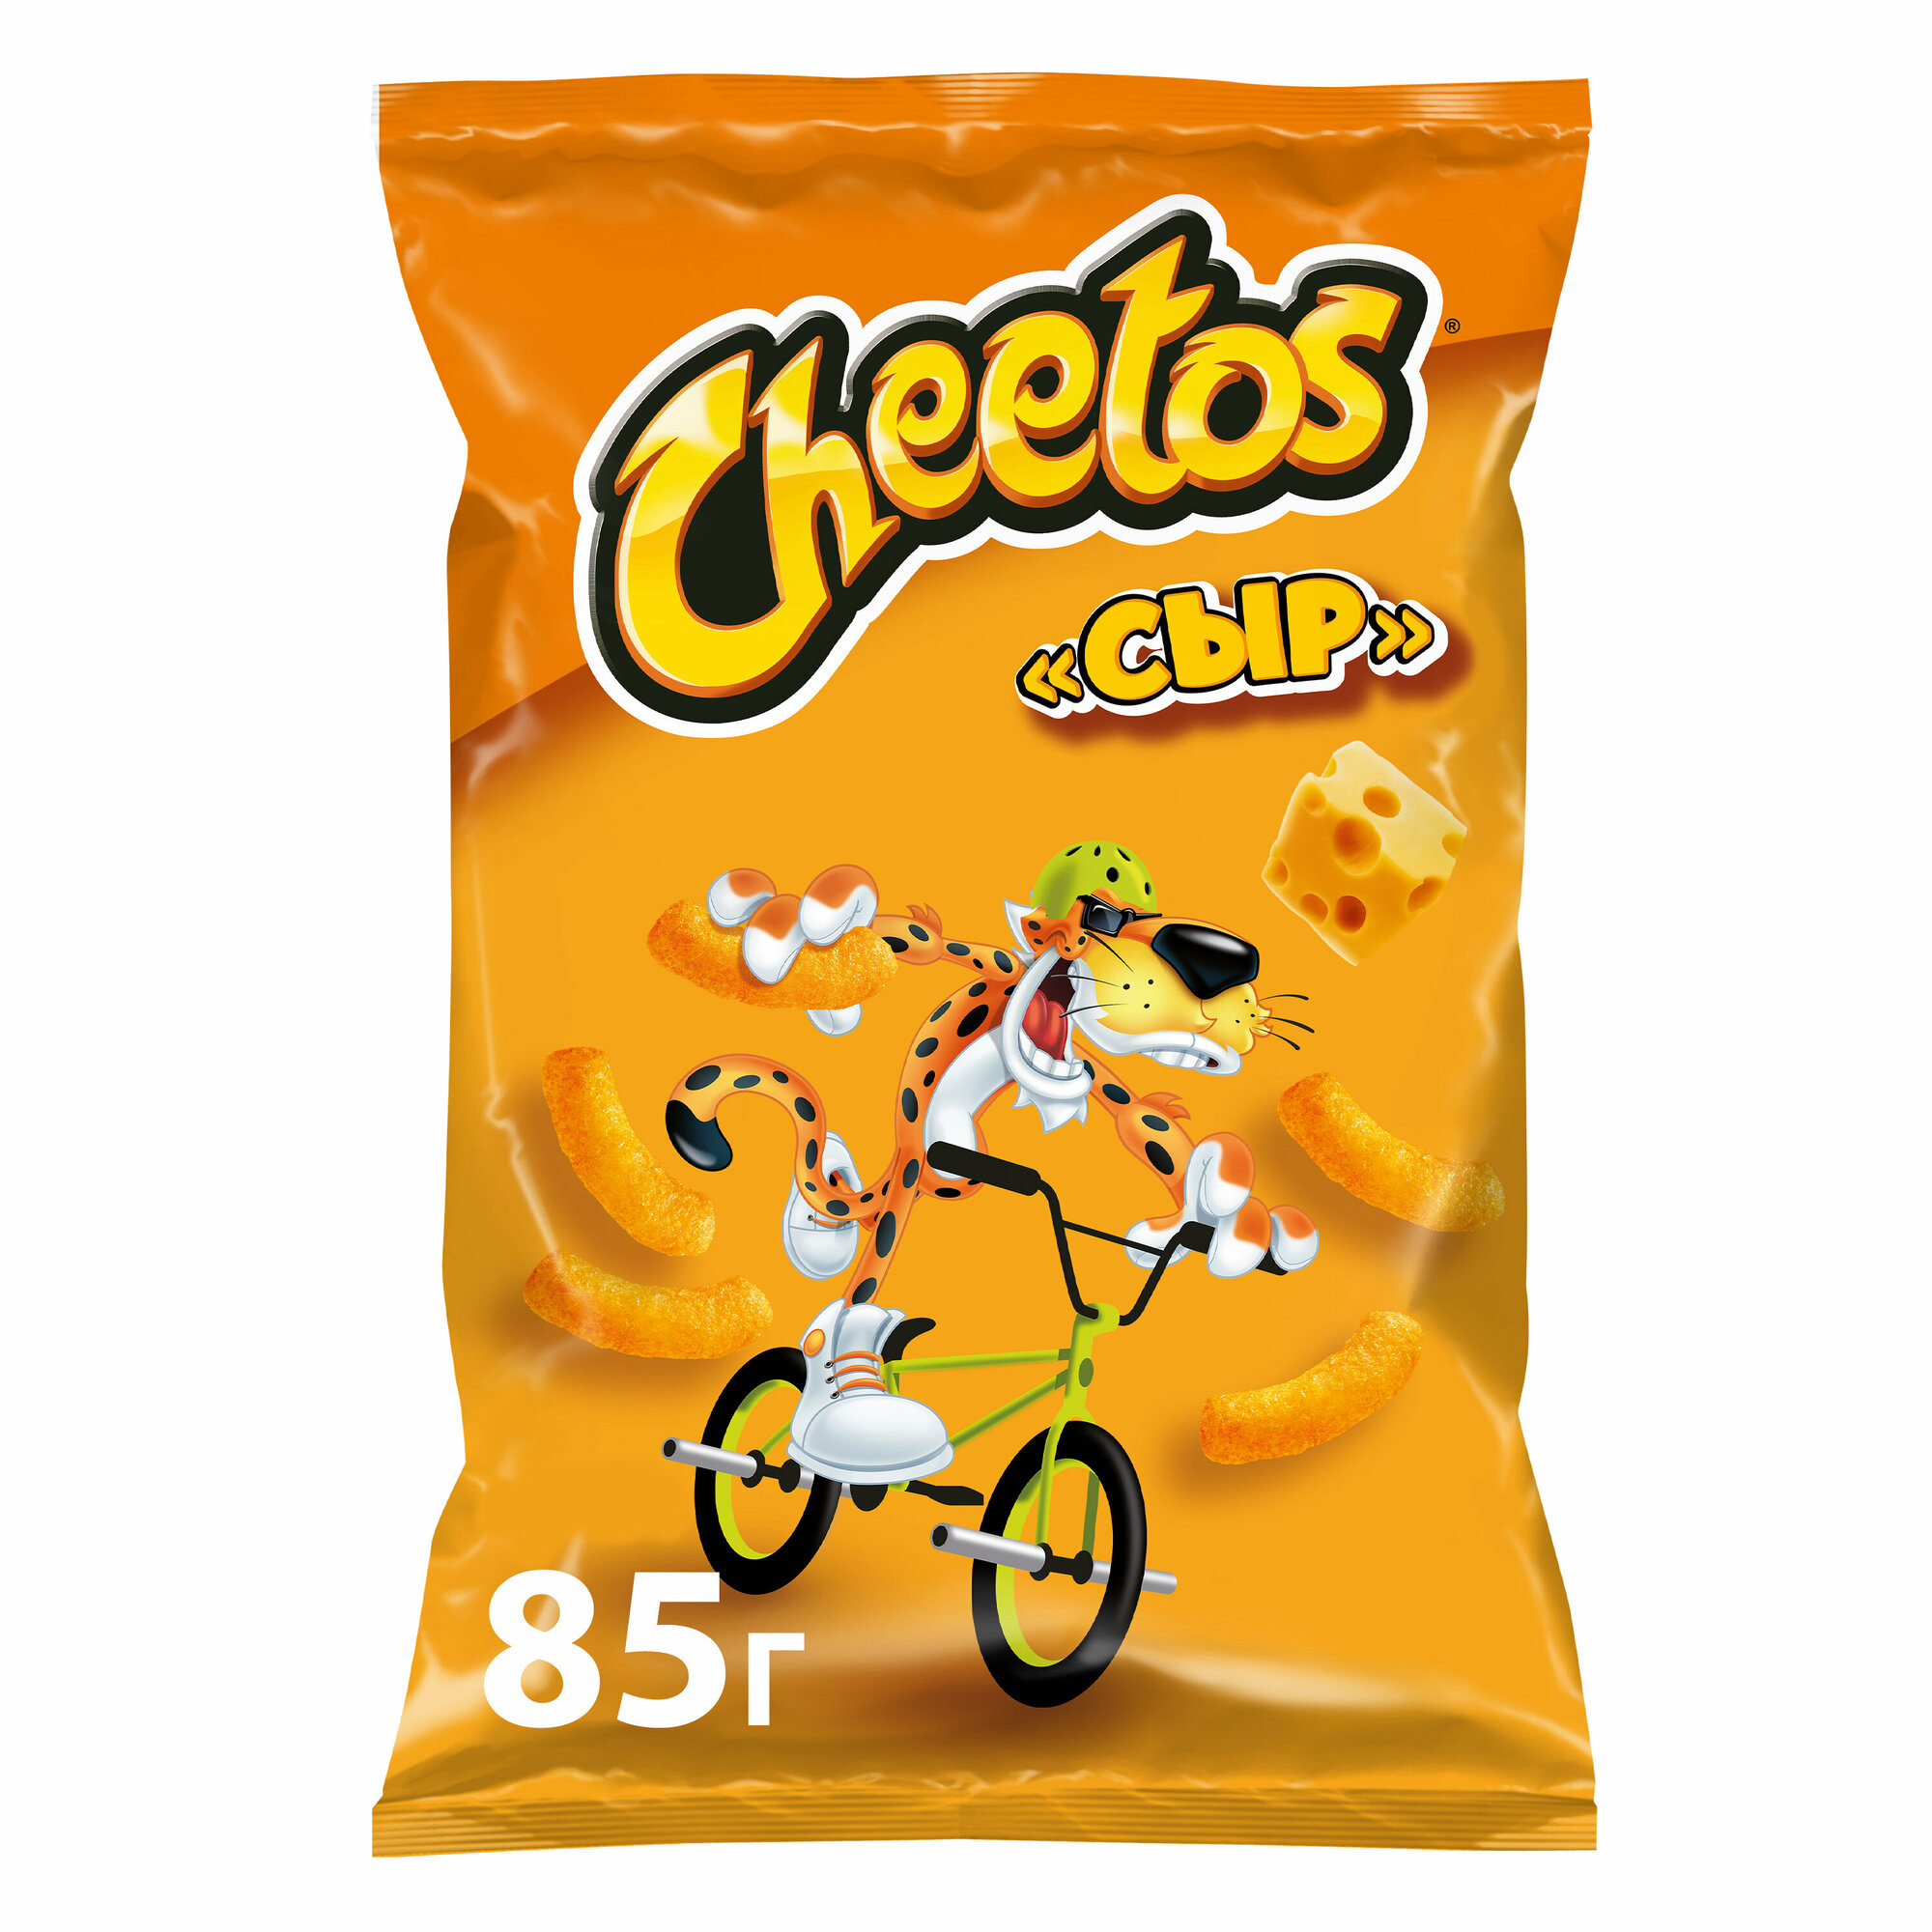 Кукурузные снеки Cheetos/Читос "Сыр" 85г